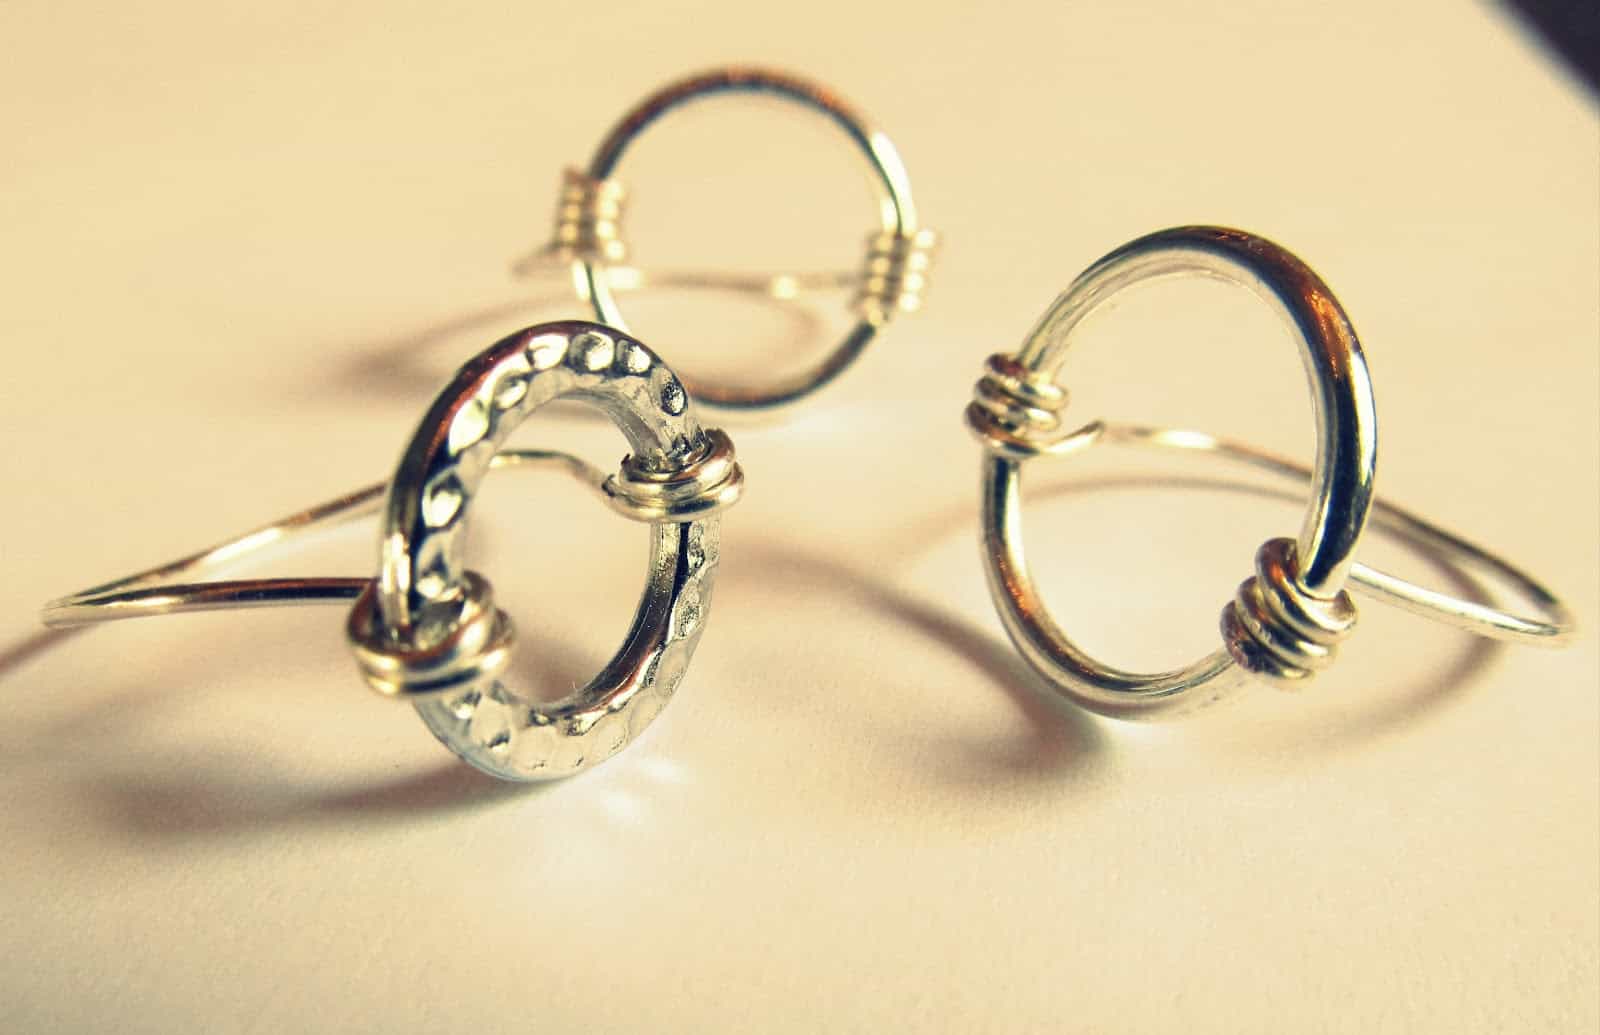 Circle rings